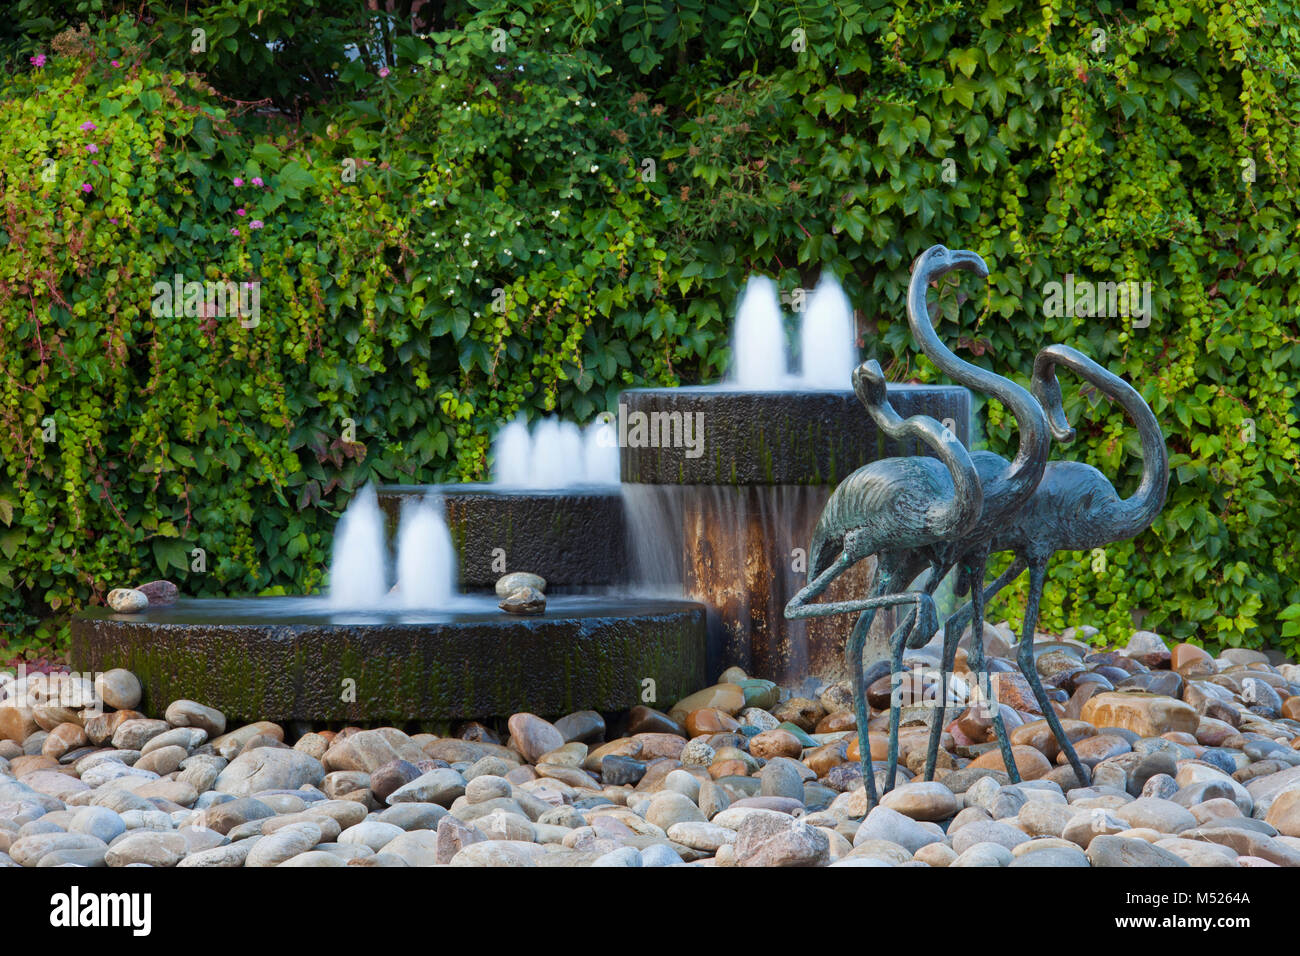 Fountain and sculpture group Three Flamingos / 3 flamingos by artist Gwendolyn L. Blume, Walsrode, Heidekreis / Heath district, Lower Saxony, Germany Stock Photo